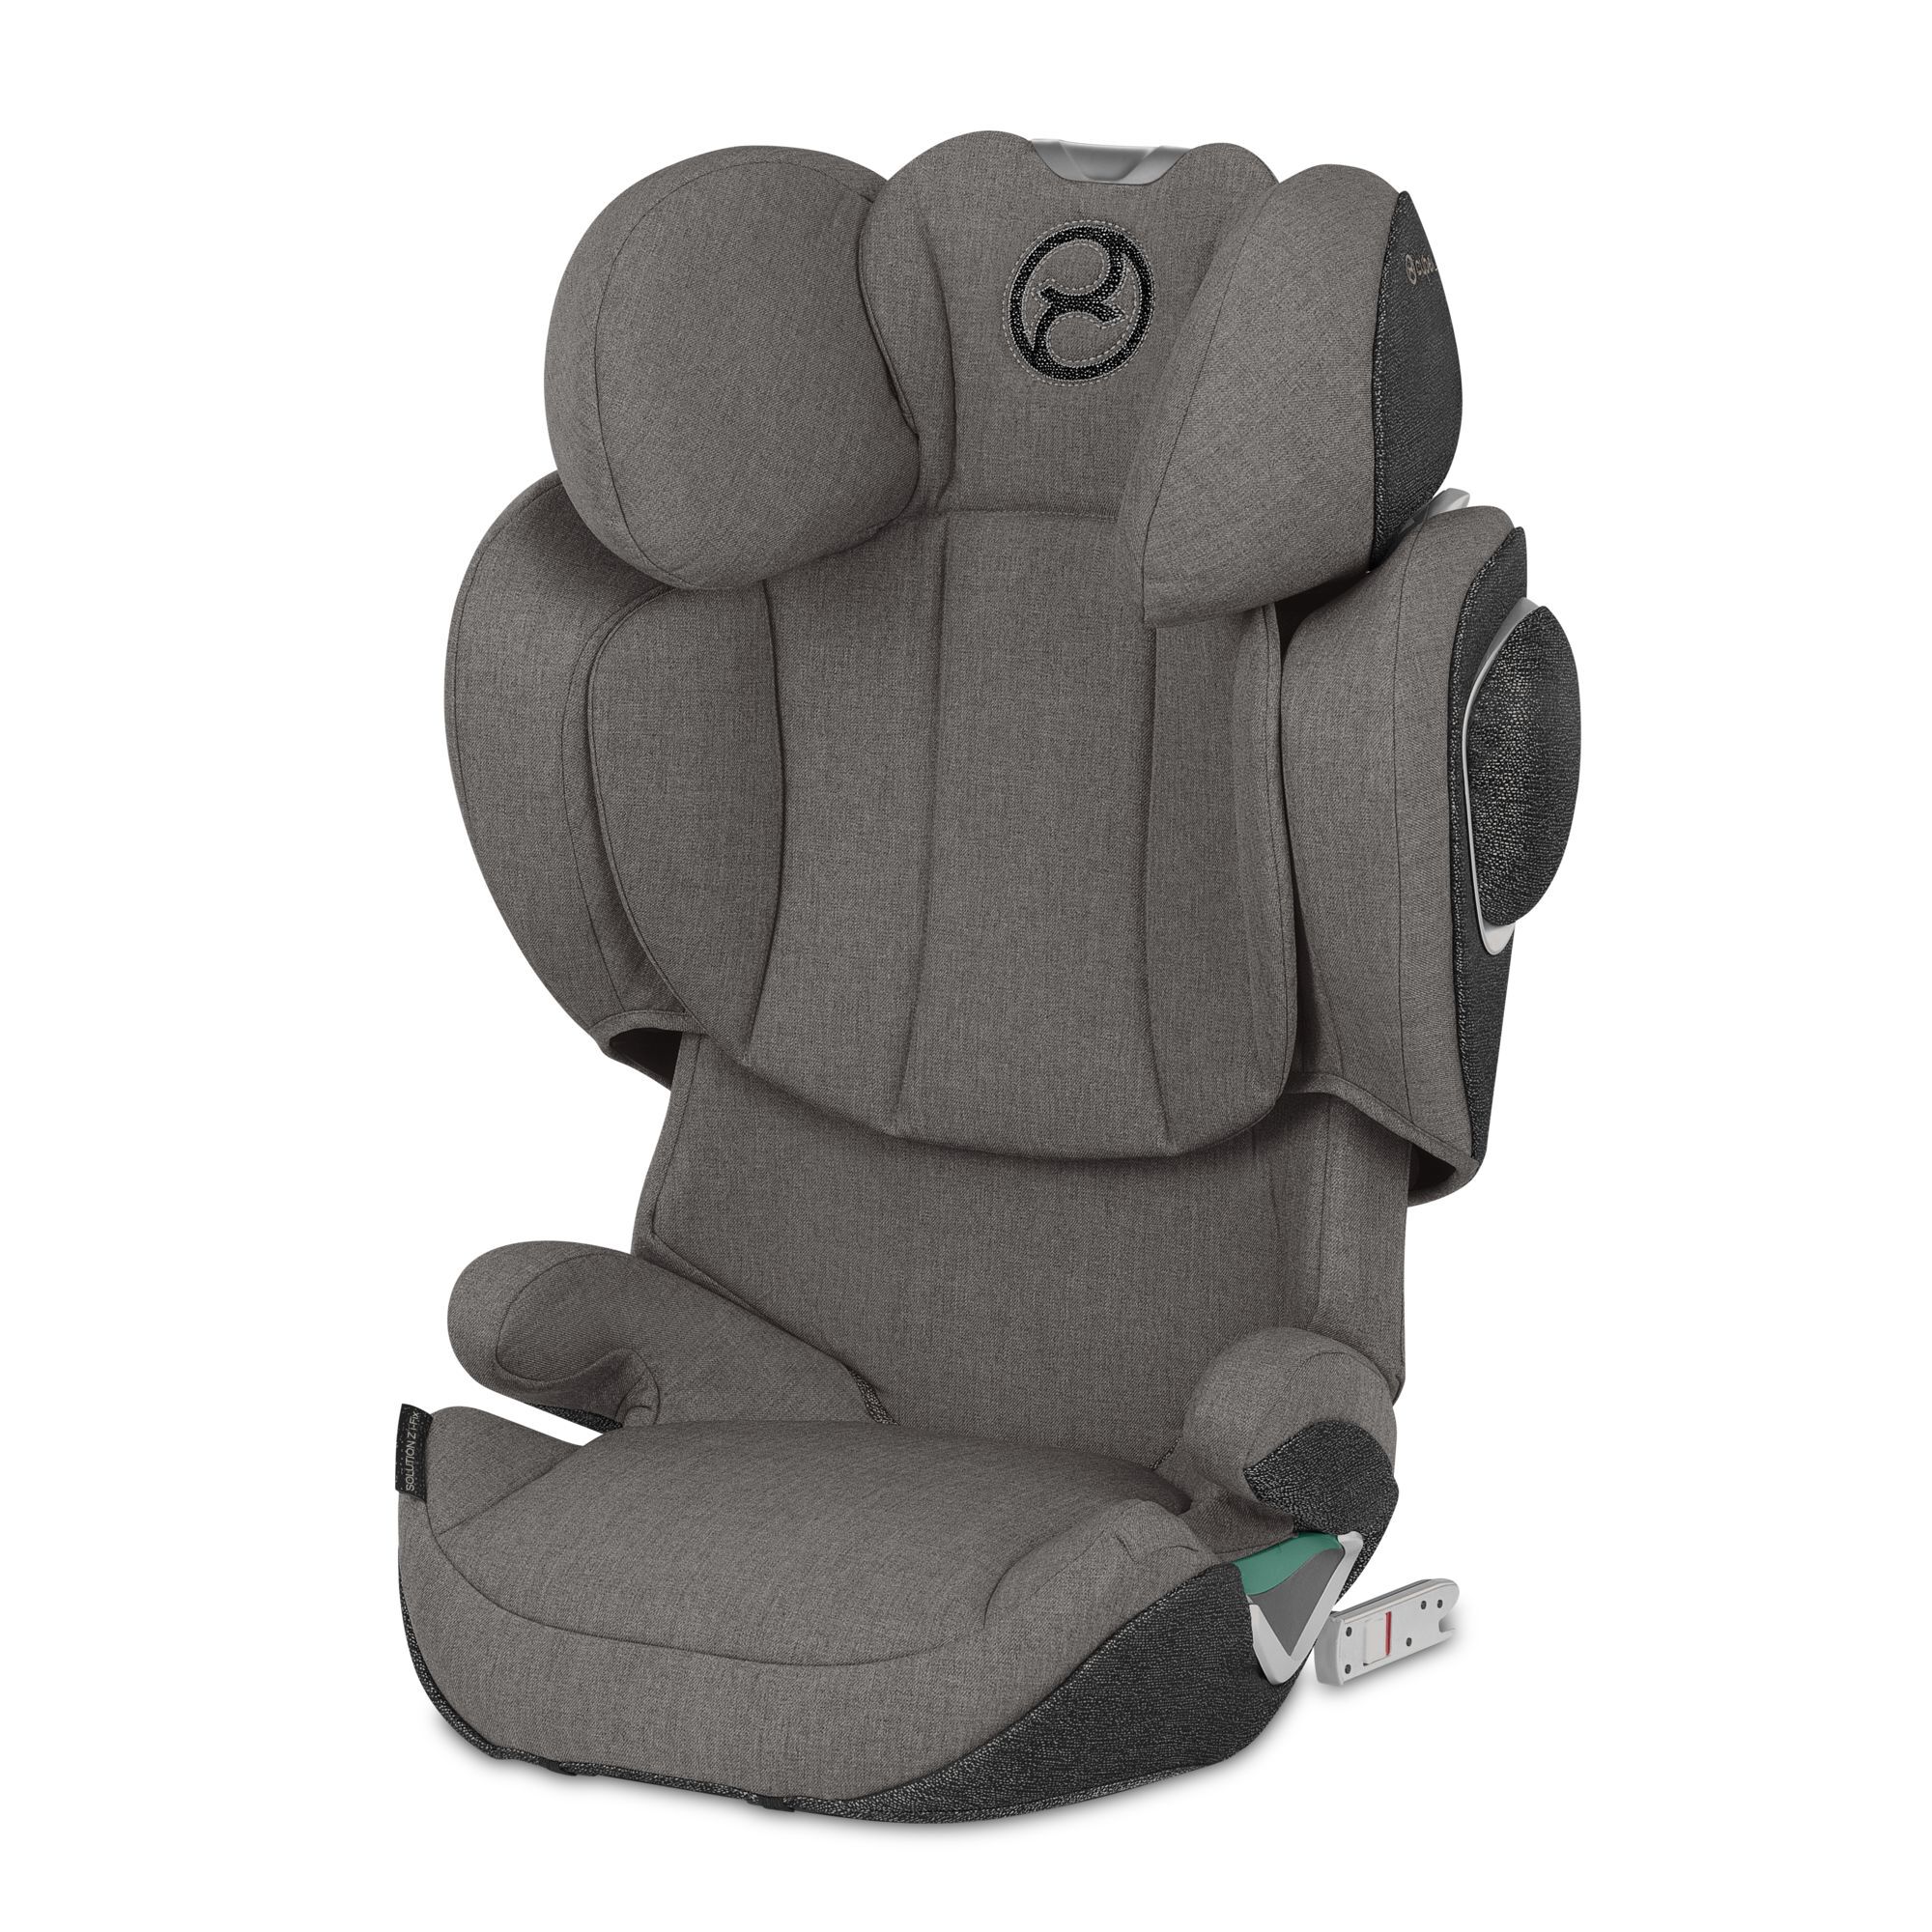 CYBEX Test Winner Platinum Solution Z i-Fix Car Seat | Buy Online